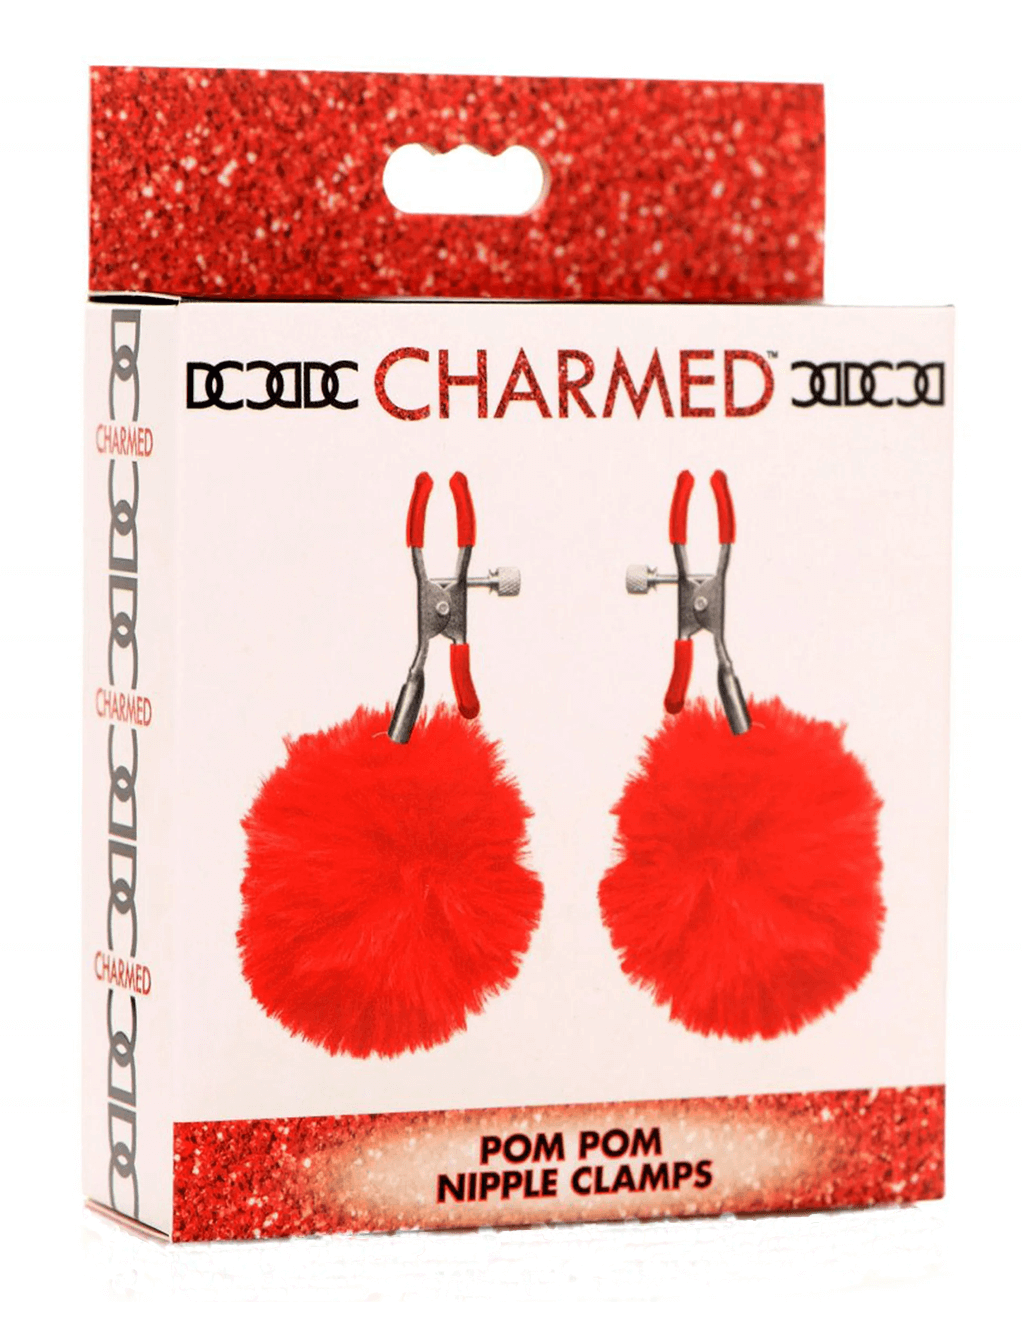 Charmed Pom Pom Nipple Clamps - Red - Box